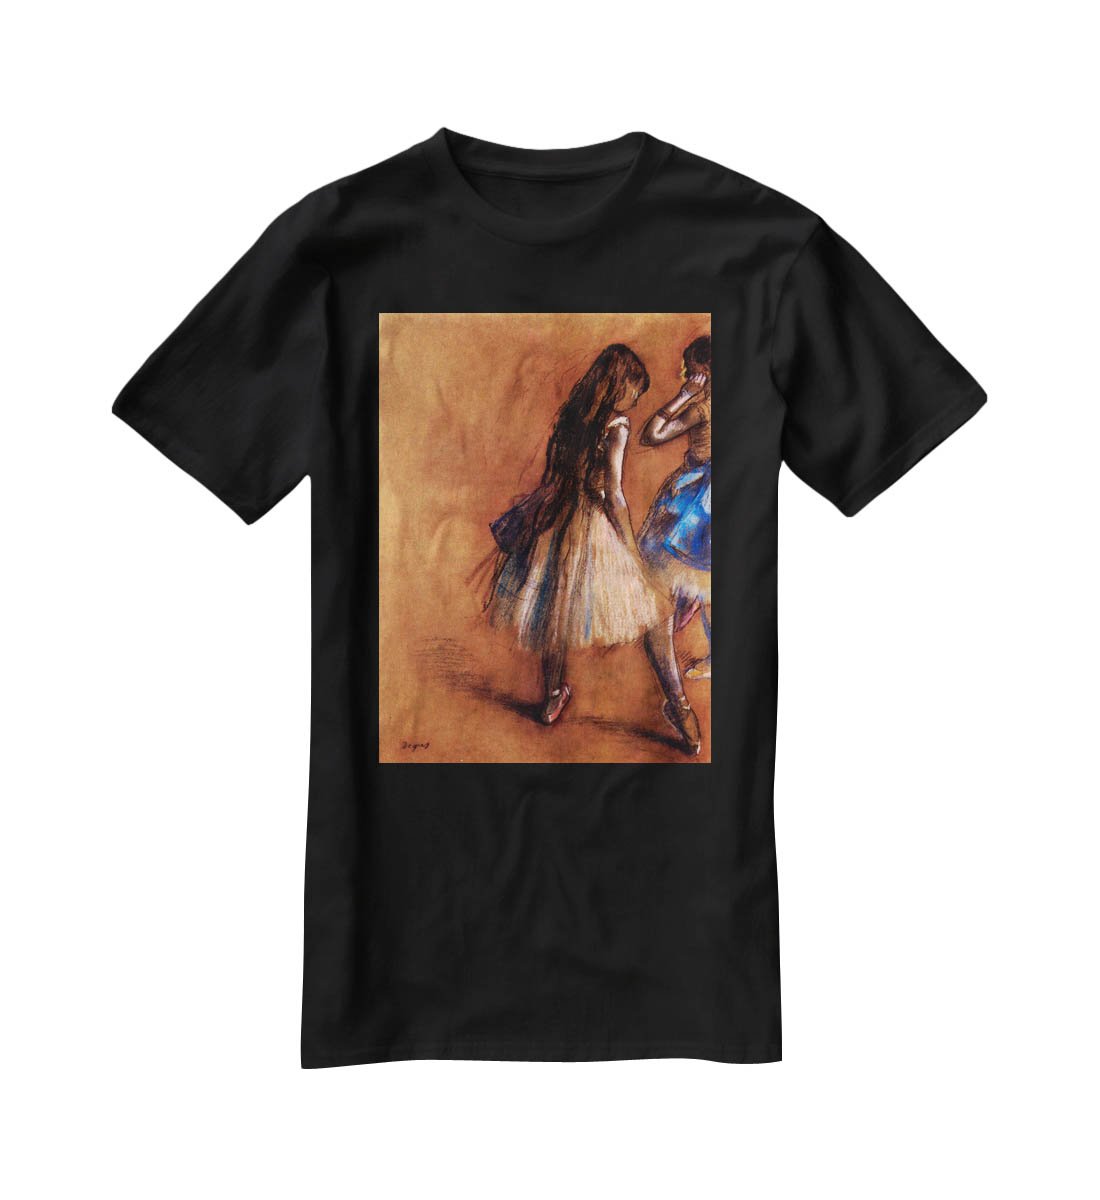 Two dancers 1 by Degas T-Shirt - Canvas Art Rocks - 1